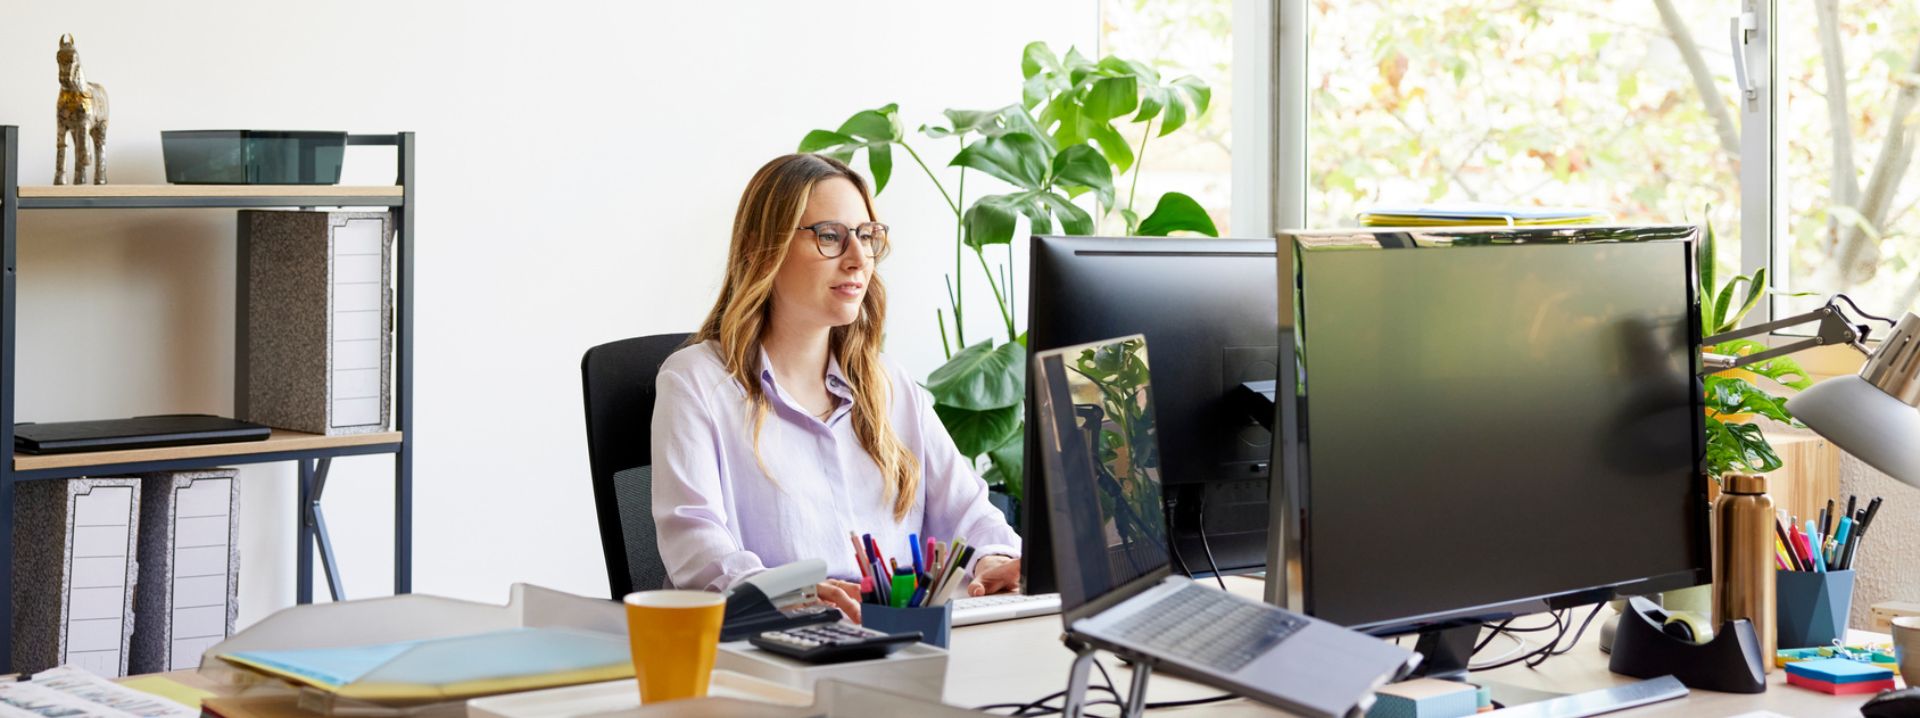 Bürosituation: Frau sitzt am PC